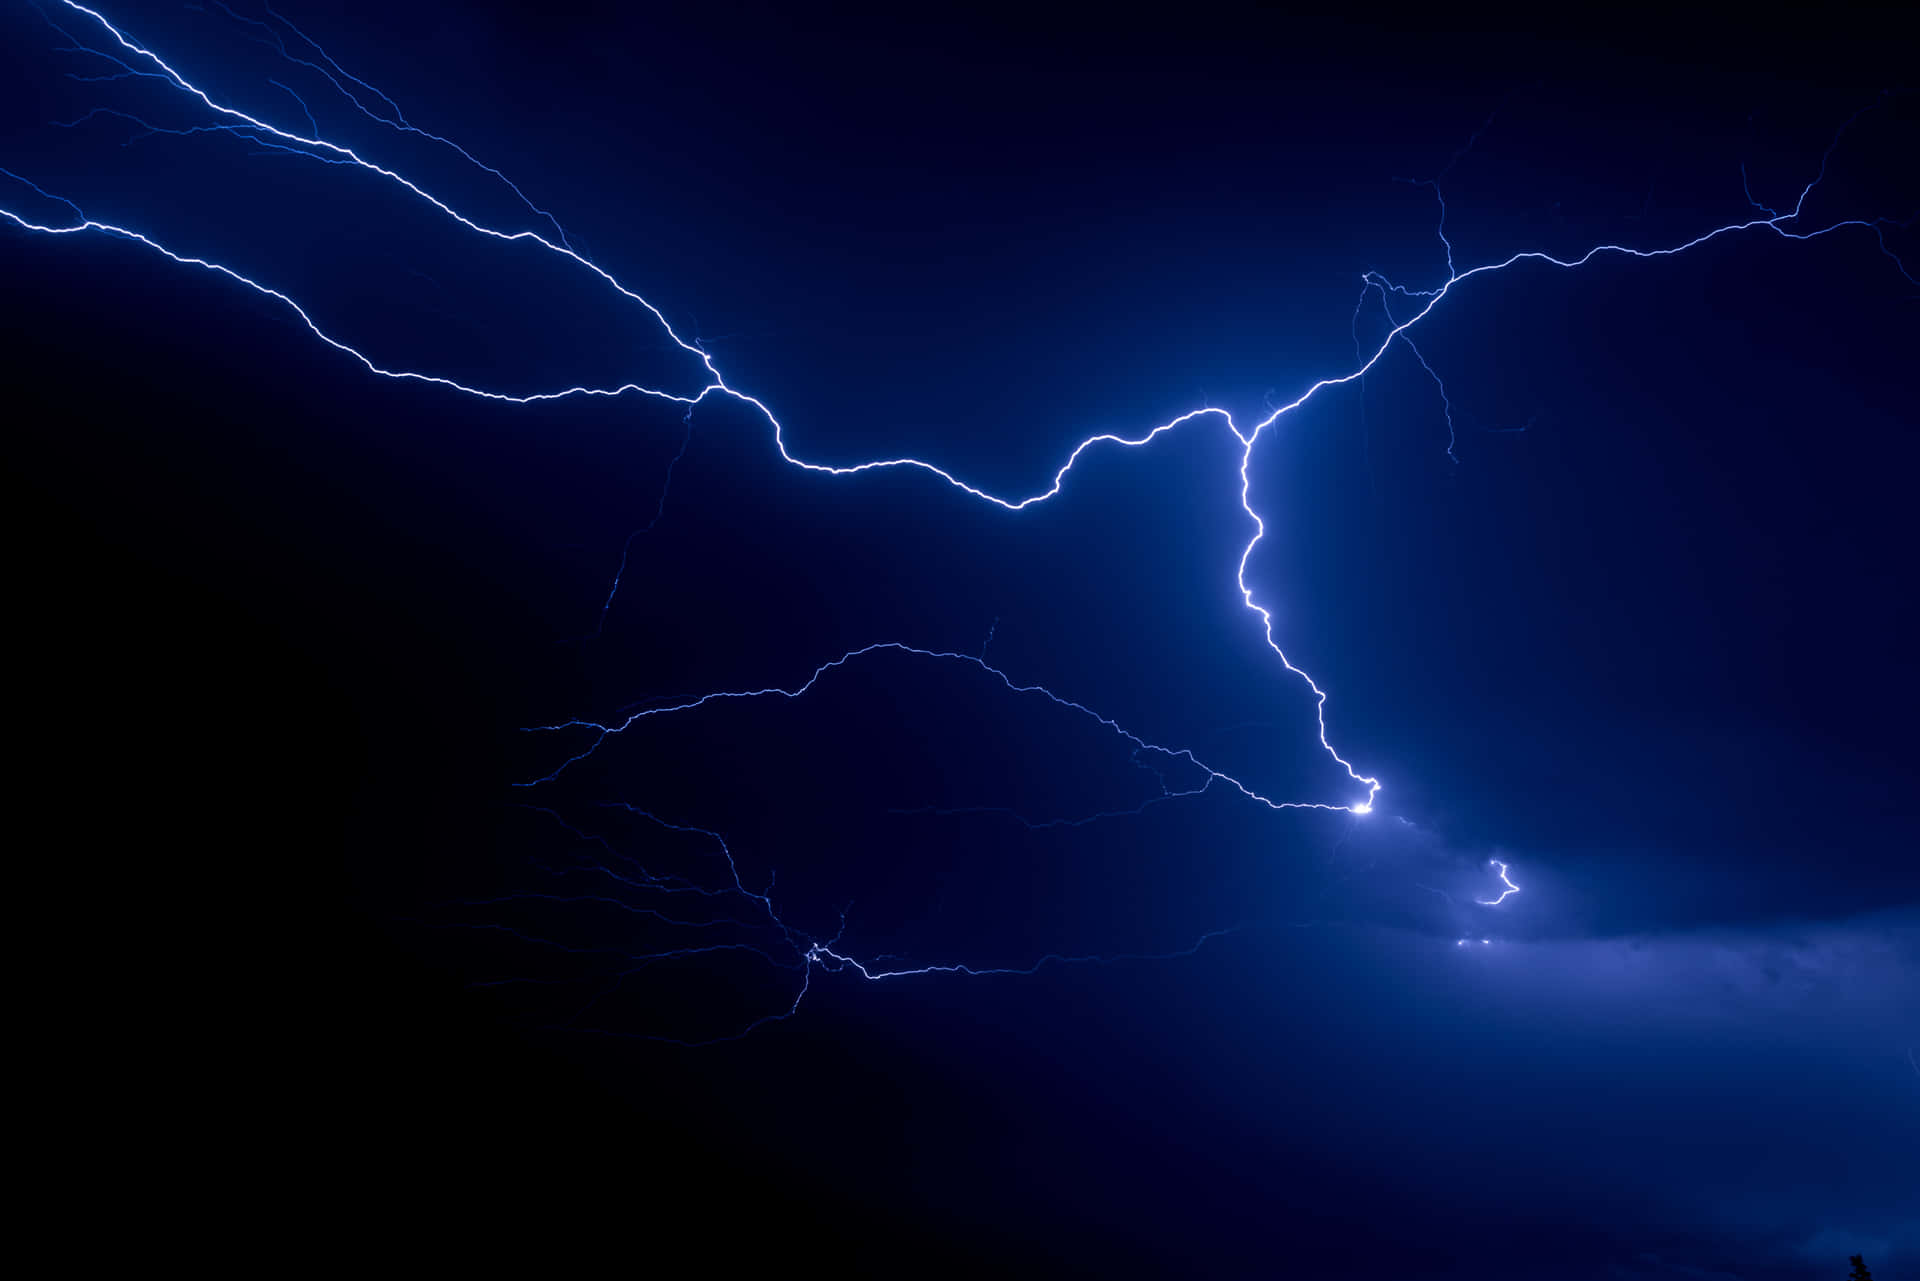 Witness the raw power of Blue Lightning